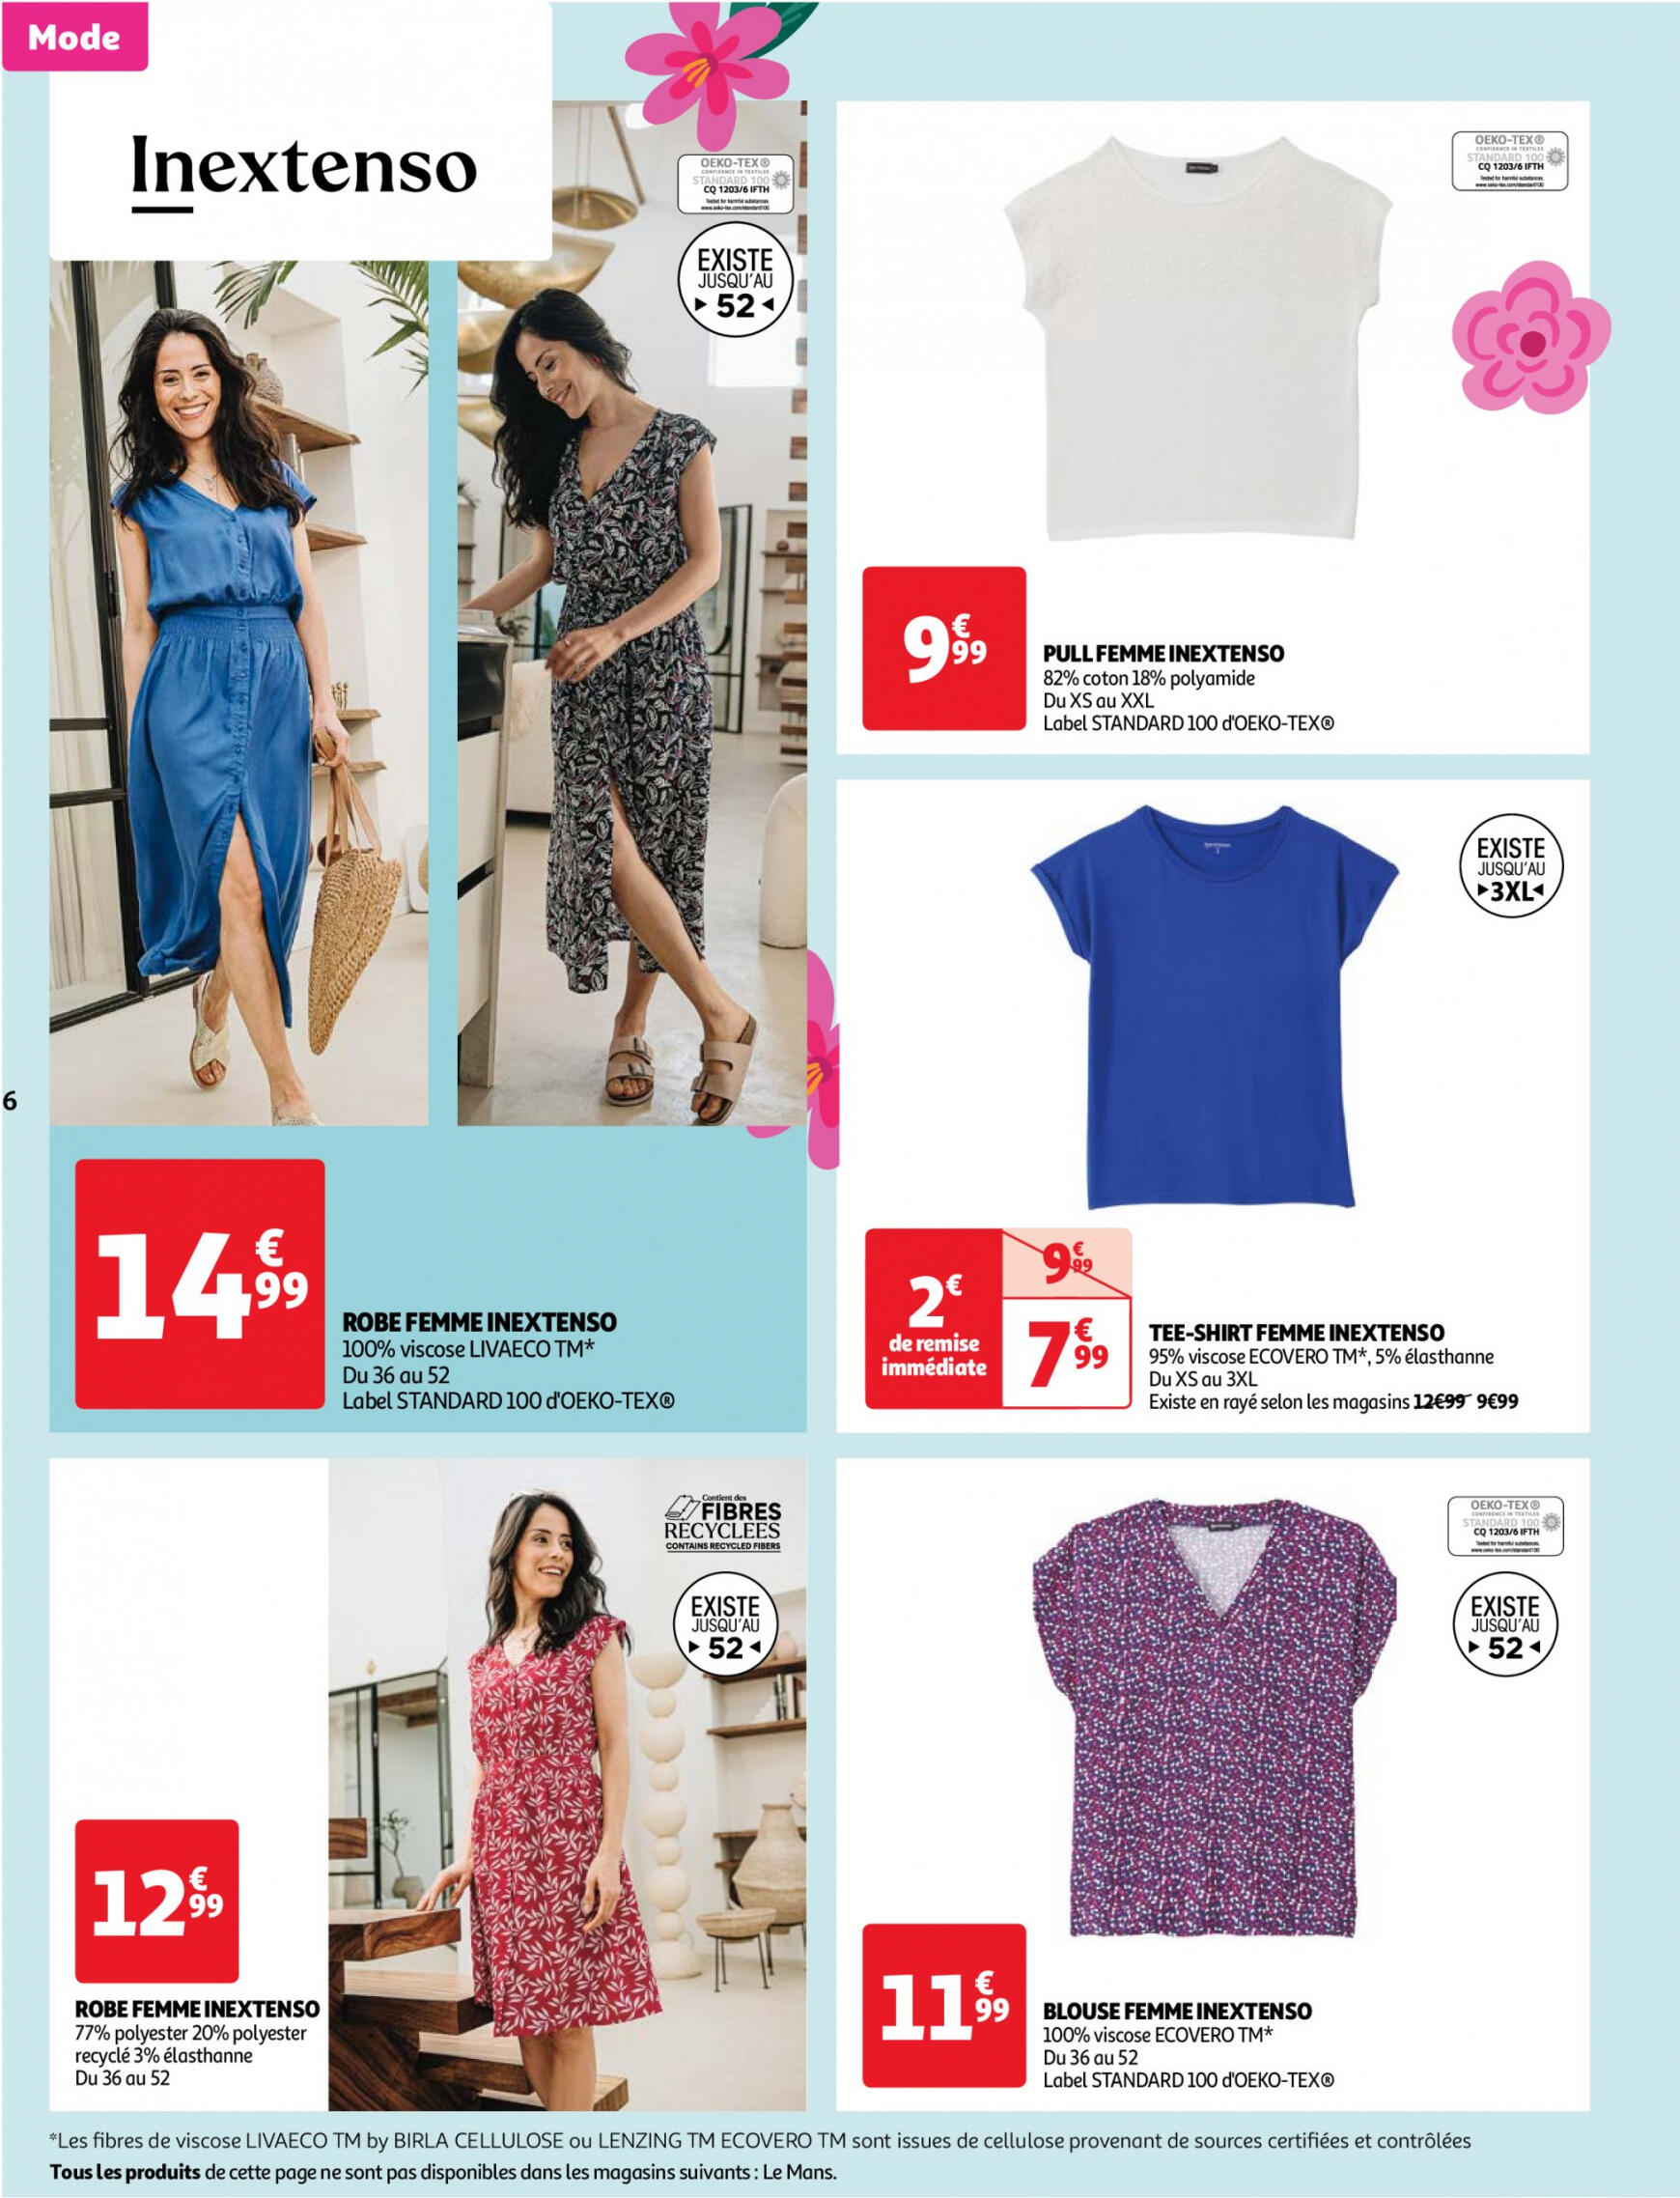 auchan - Auchan - Merci maman folder huidig 14.05. - 26.05. - page: 6